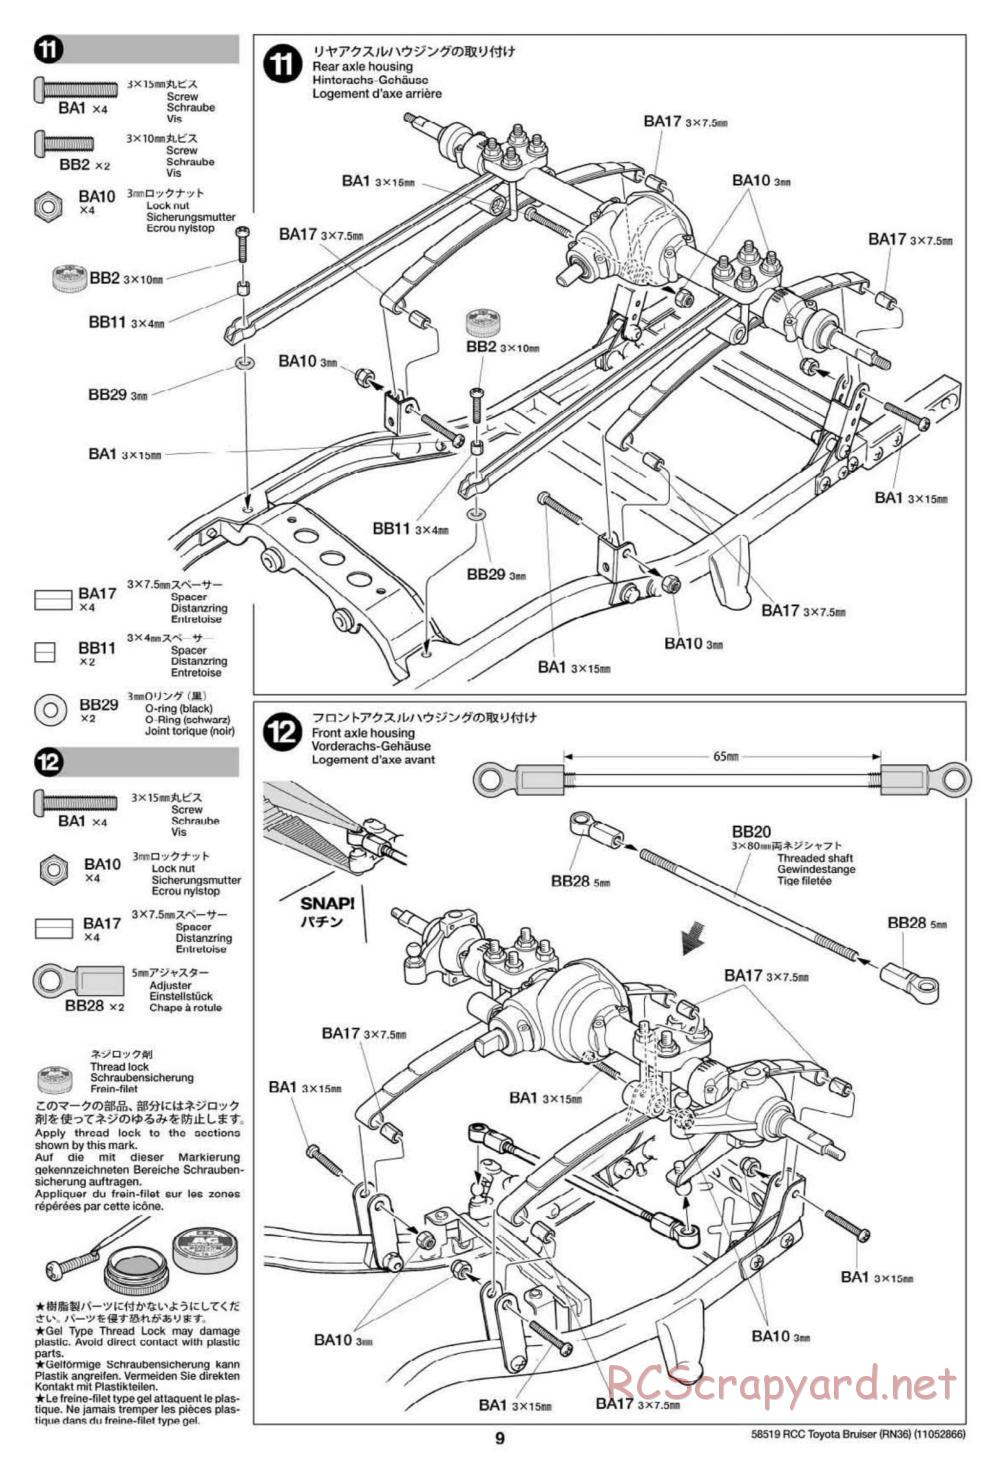 Tamiya - Toyota 4x4 Pick Up Bruiser Chassis - Manual - Page 9